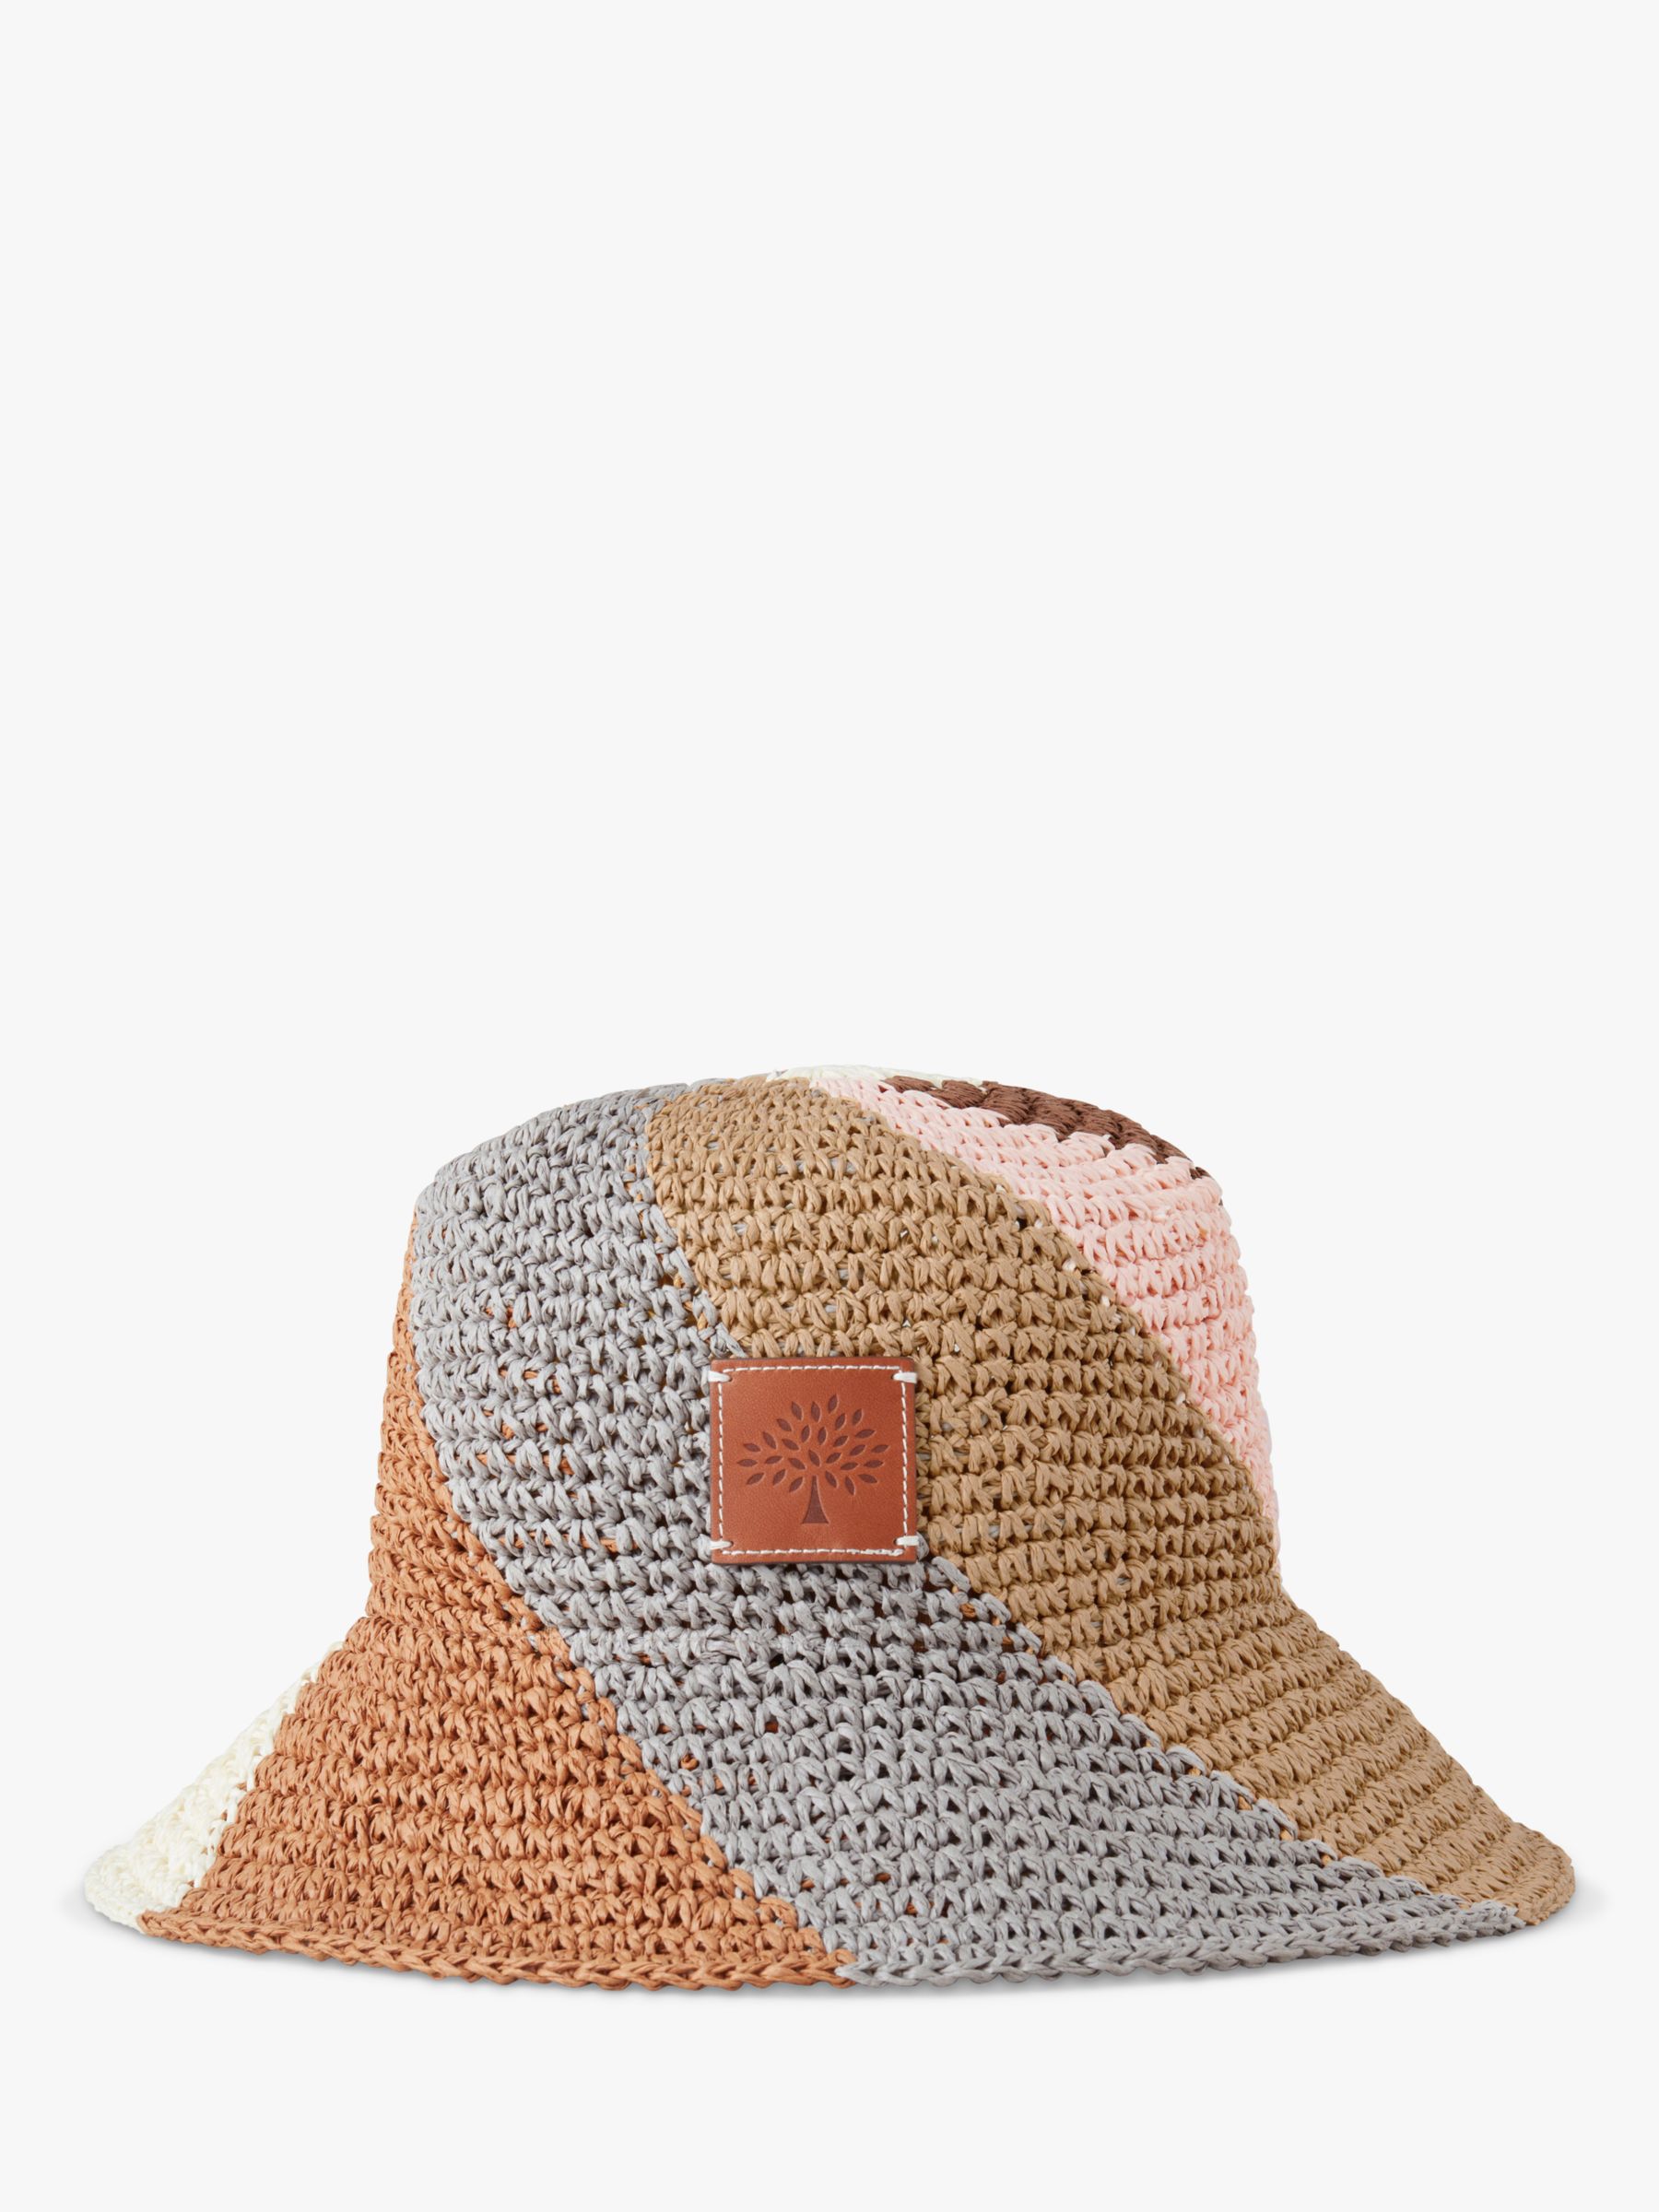 Mulberry Summer Stripe Bucket Hat, Maple/Pale Grey at John Lewis